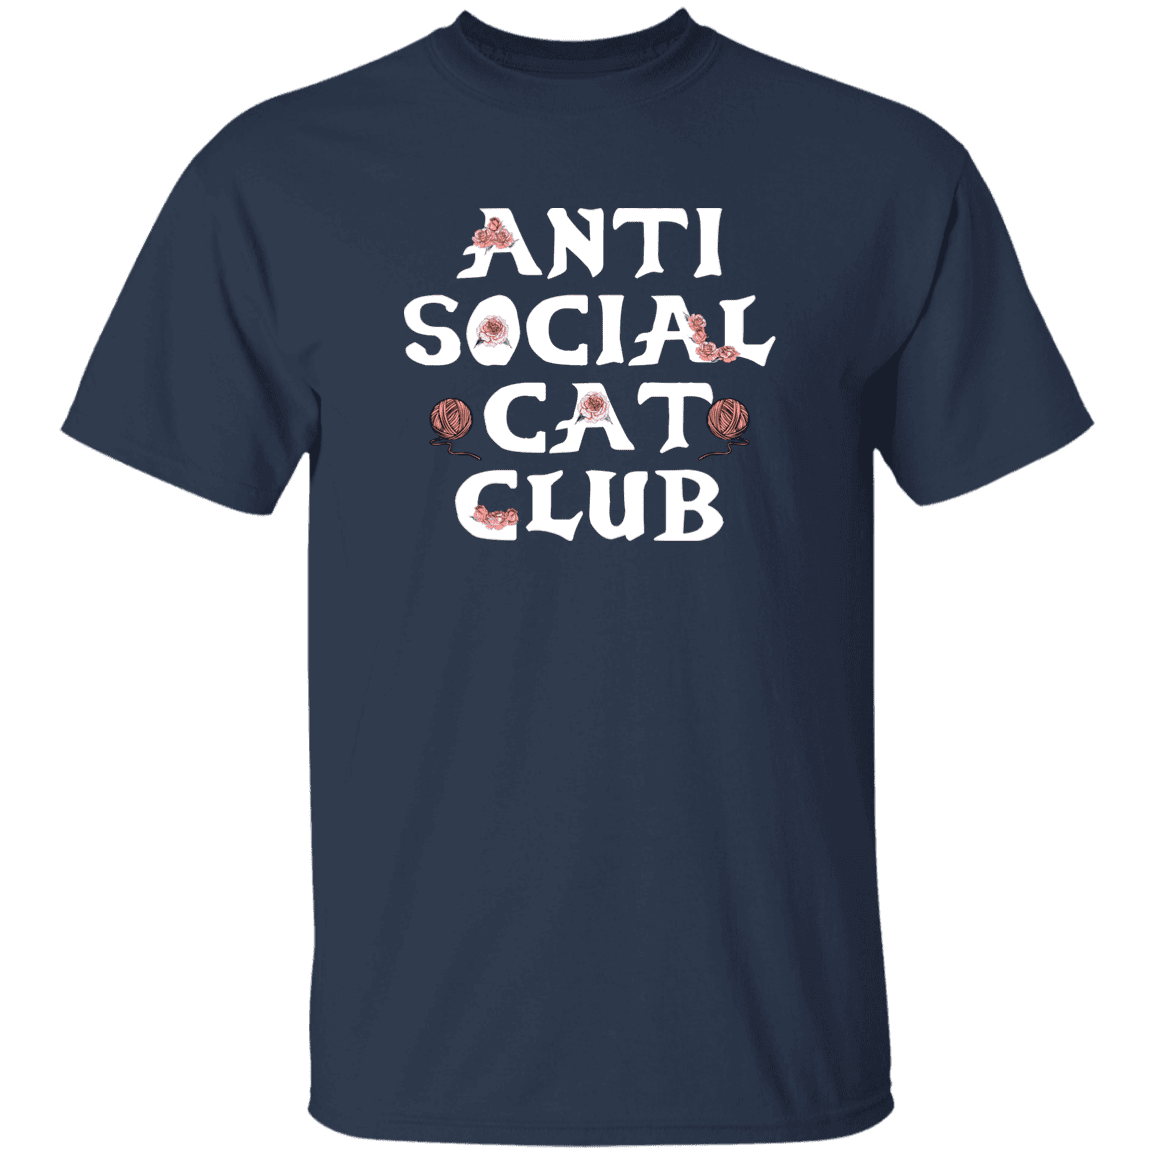 Anti Social Cat Club - T Shirt.